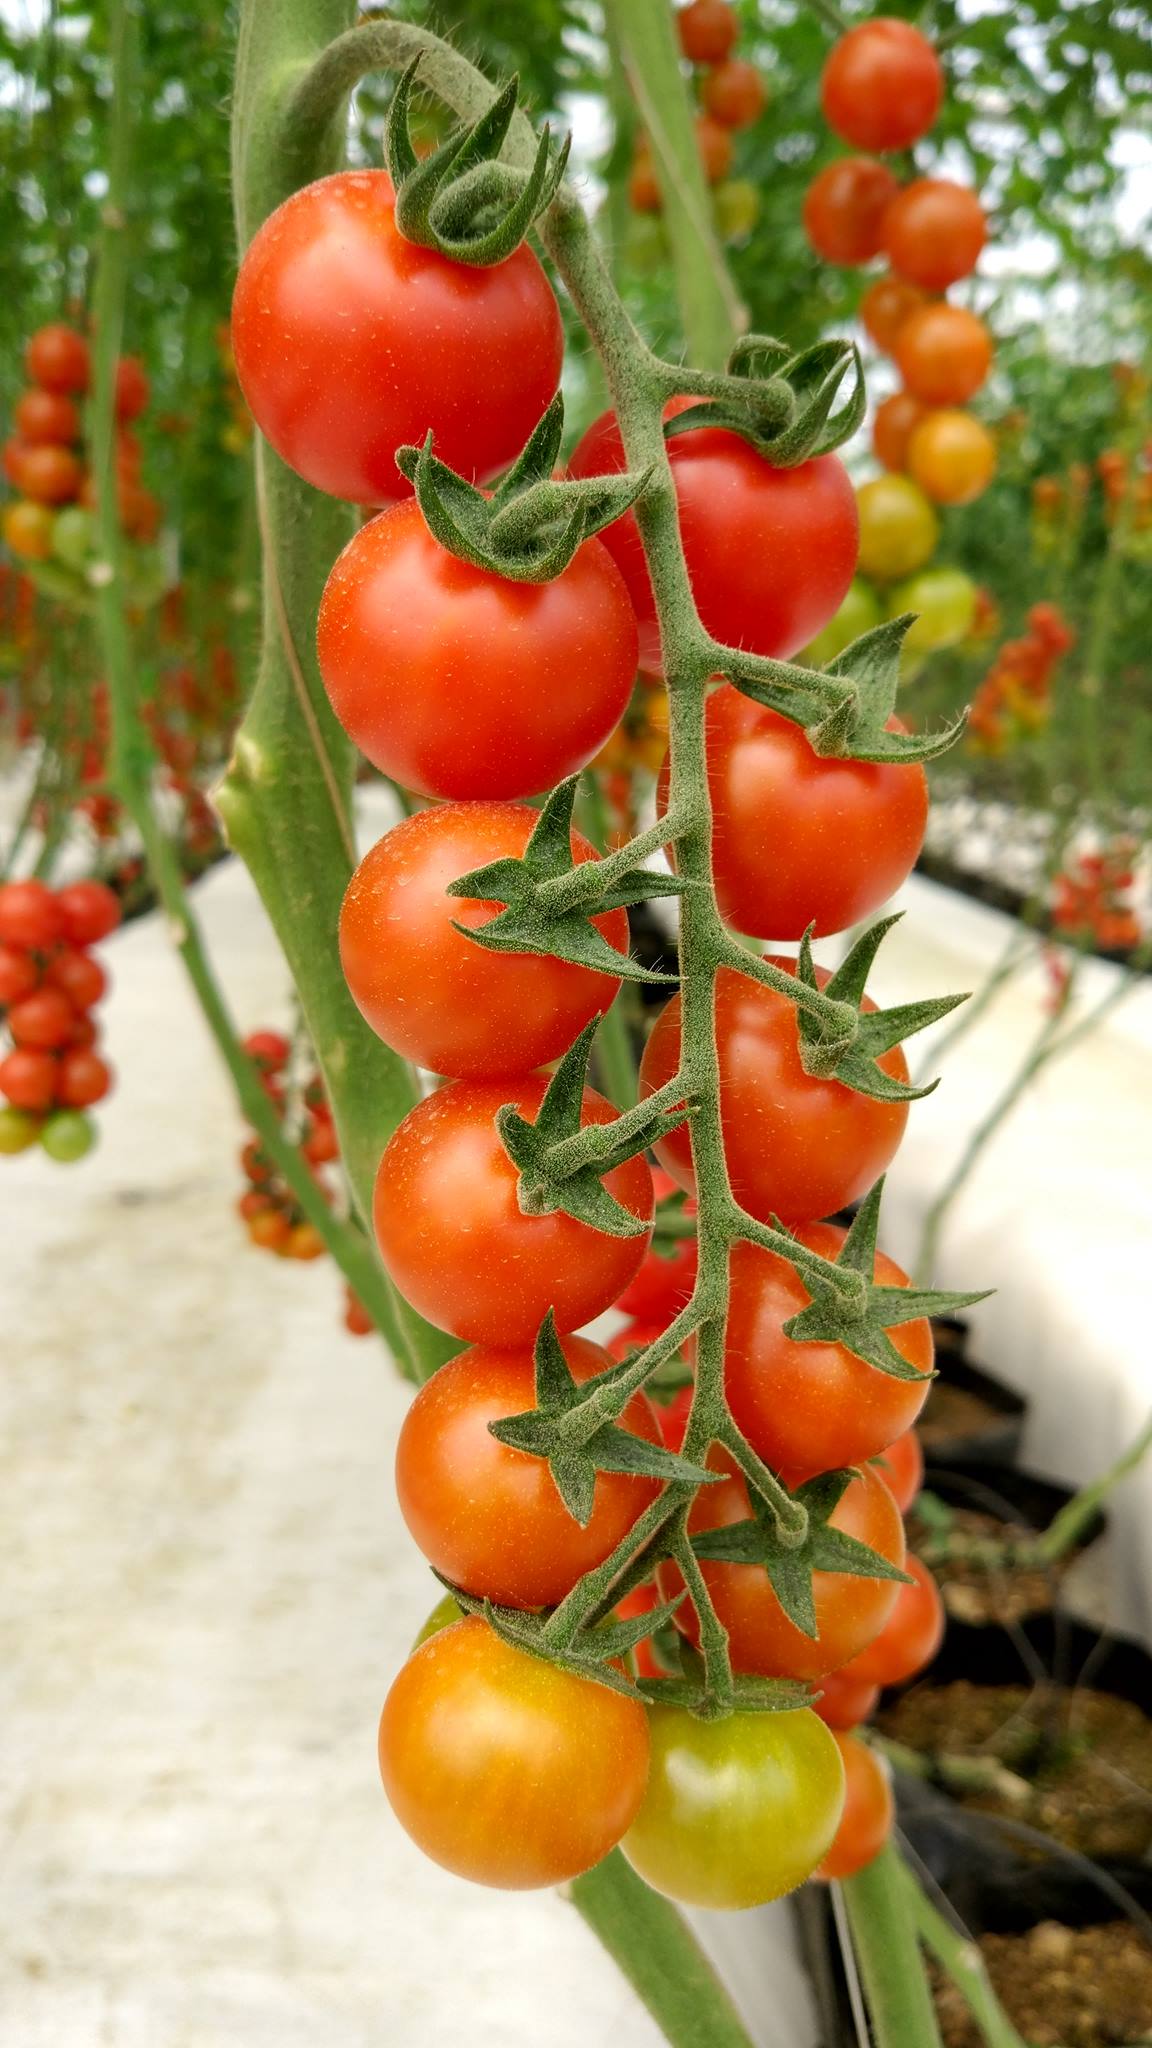 trang trại cà chua 20 tỷ